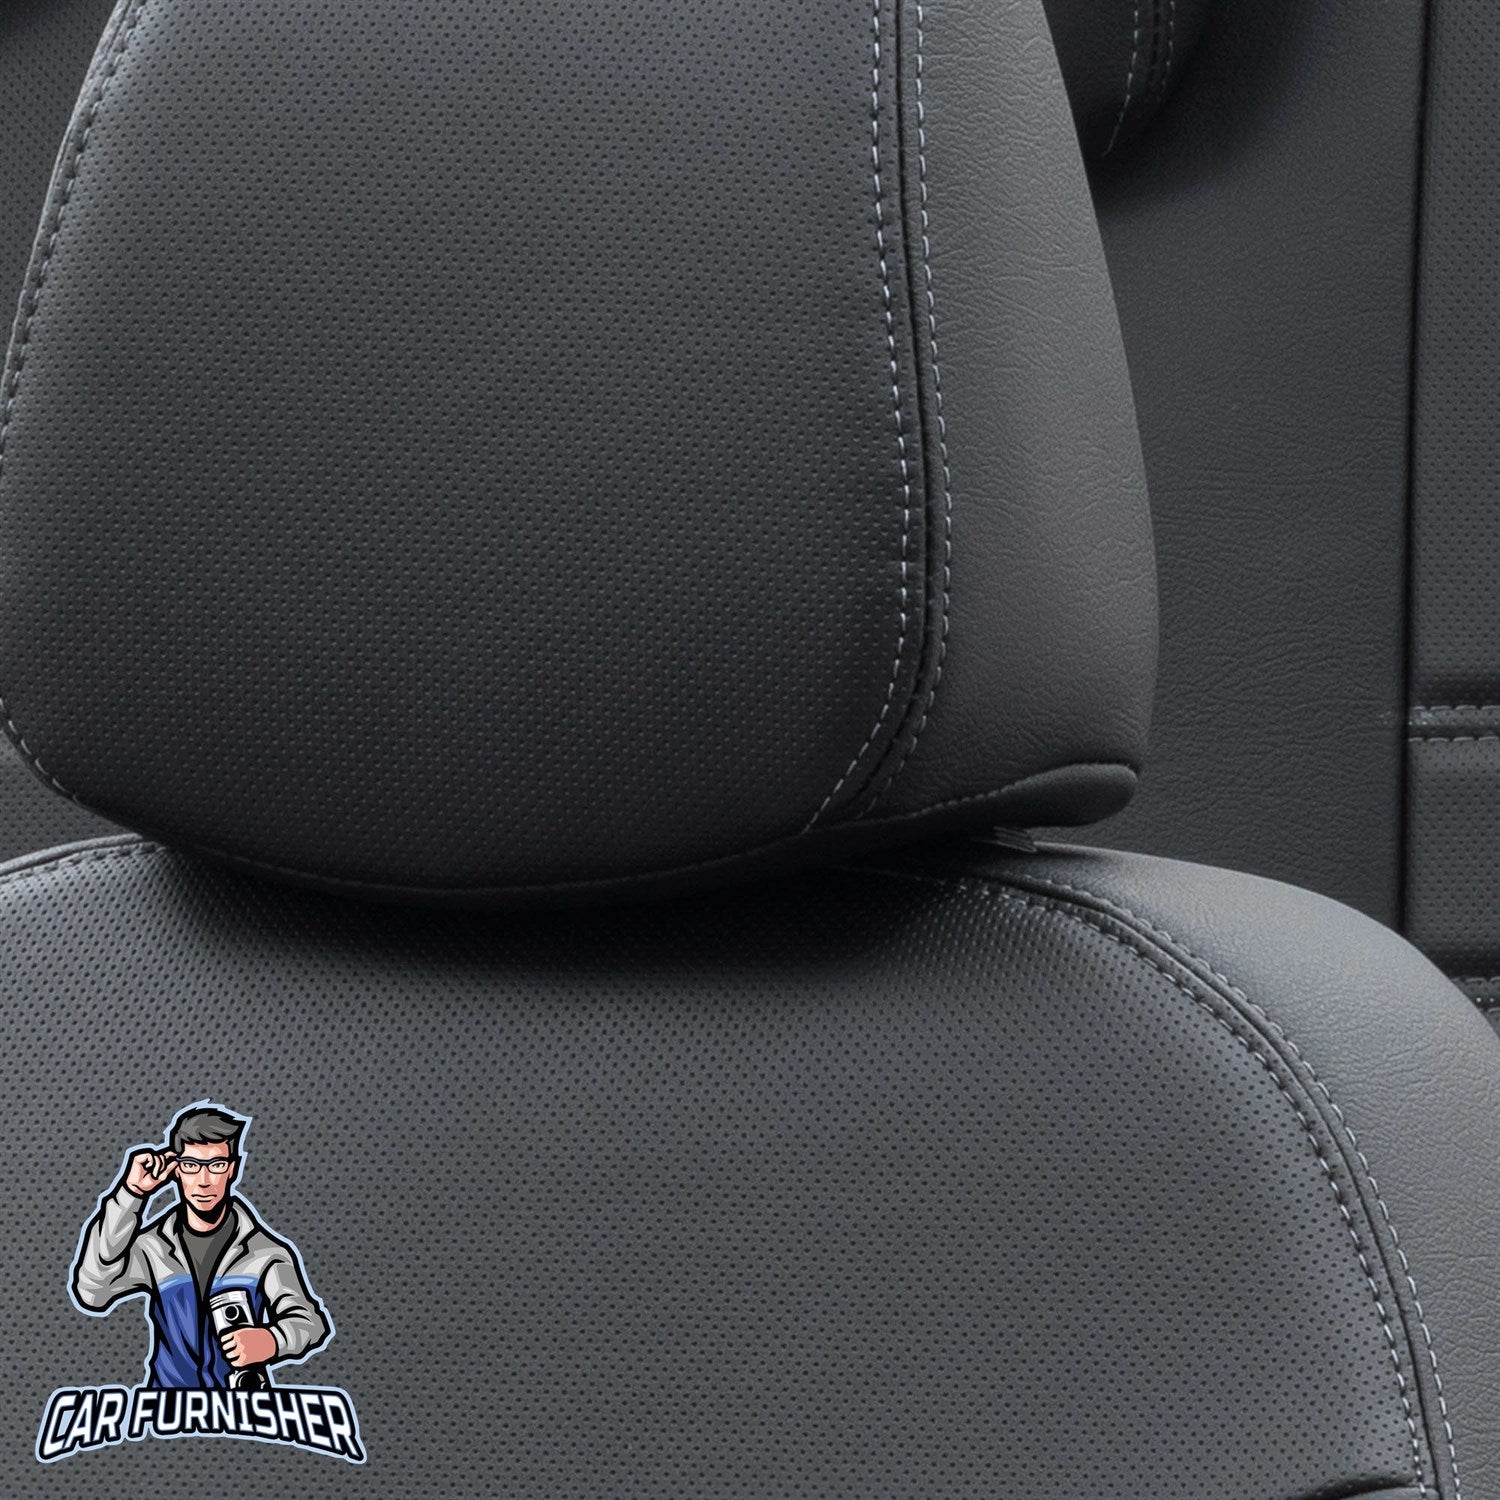 Audi A1 Car Seat Cover 2011-2016 Custom Made Istanbul Design Black Full Set (5 Seats + Handrest) Leather & Fabric